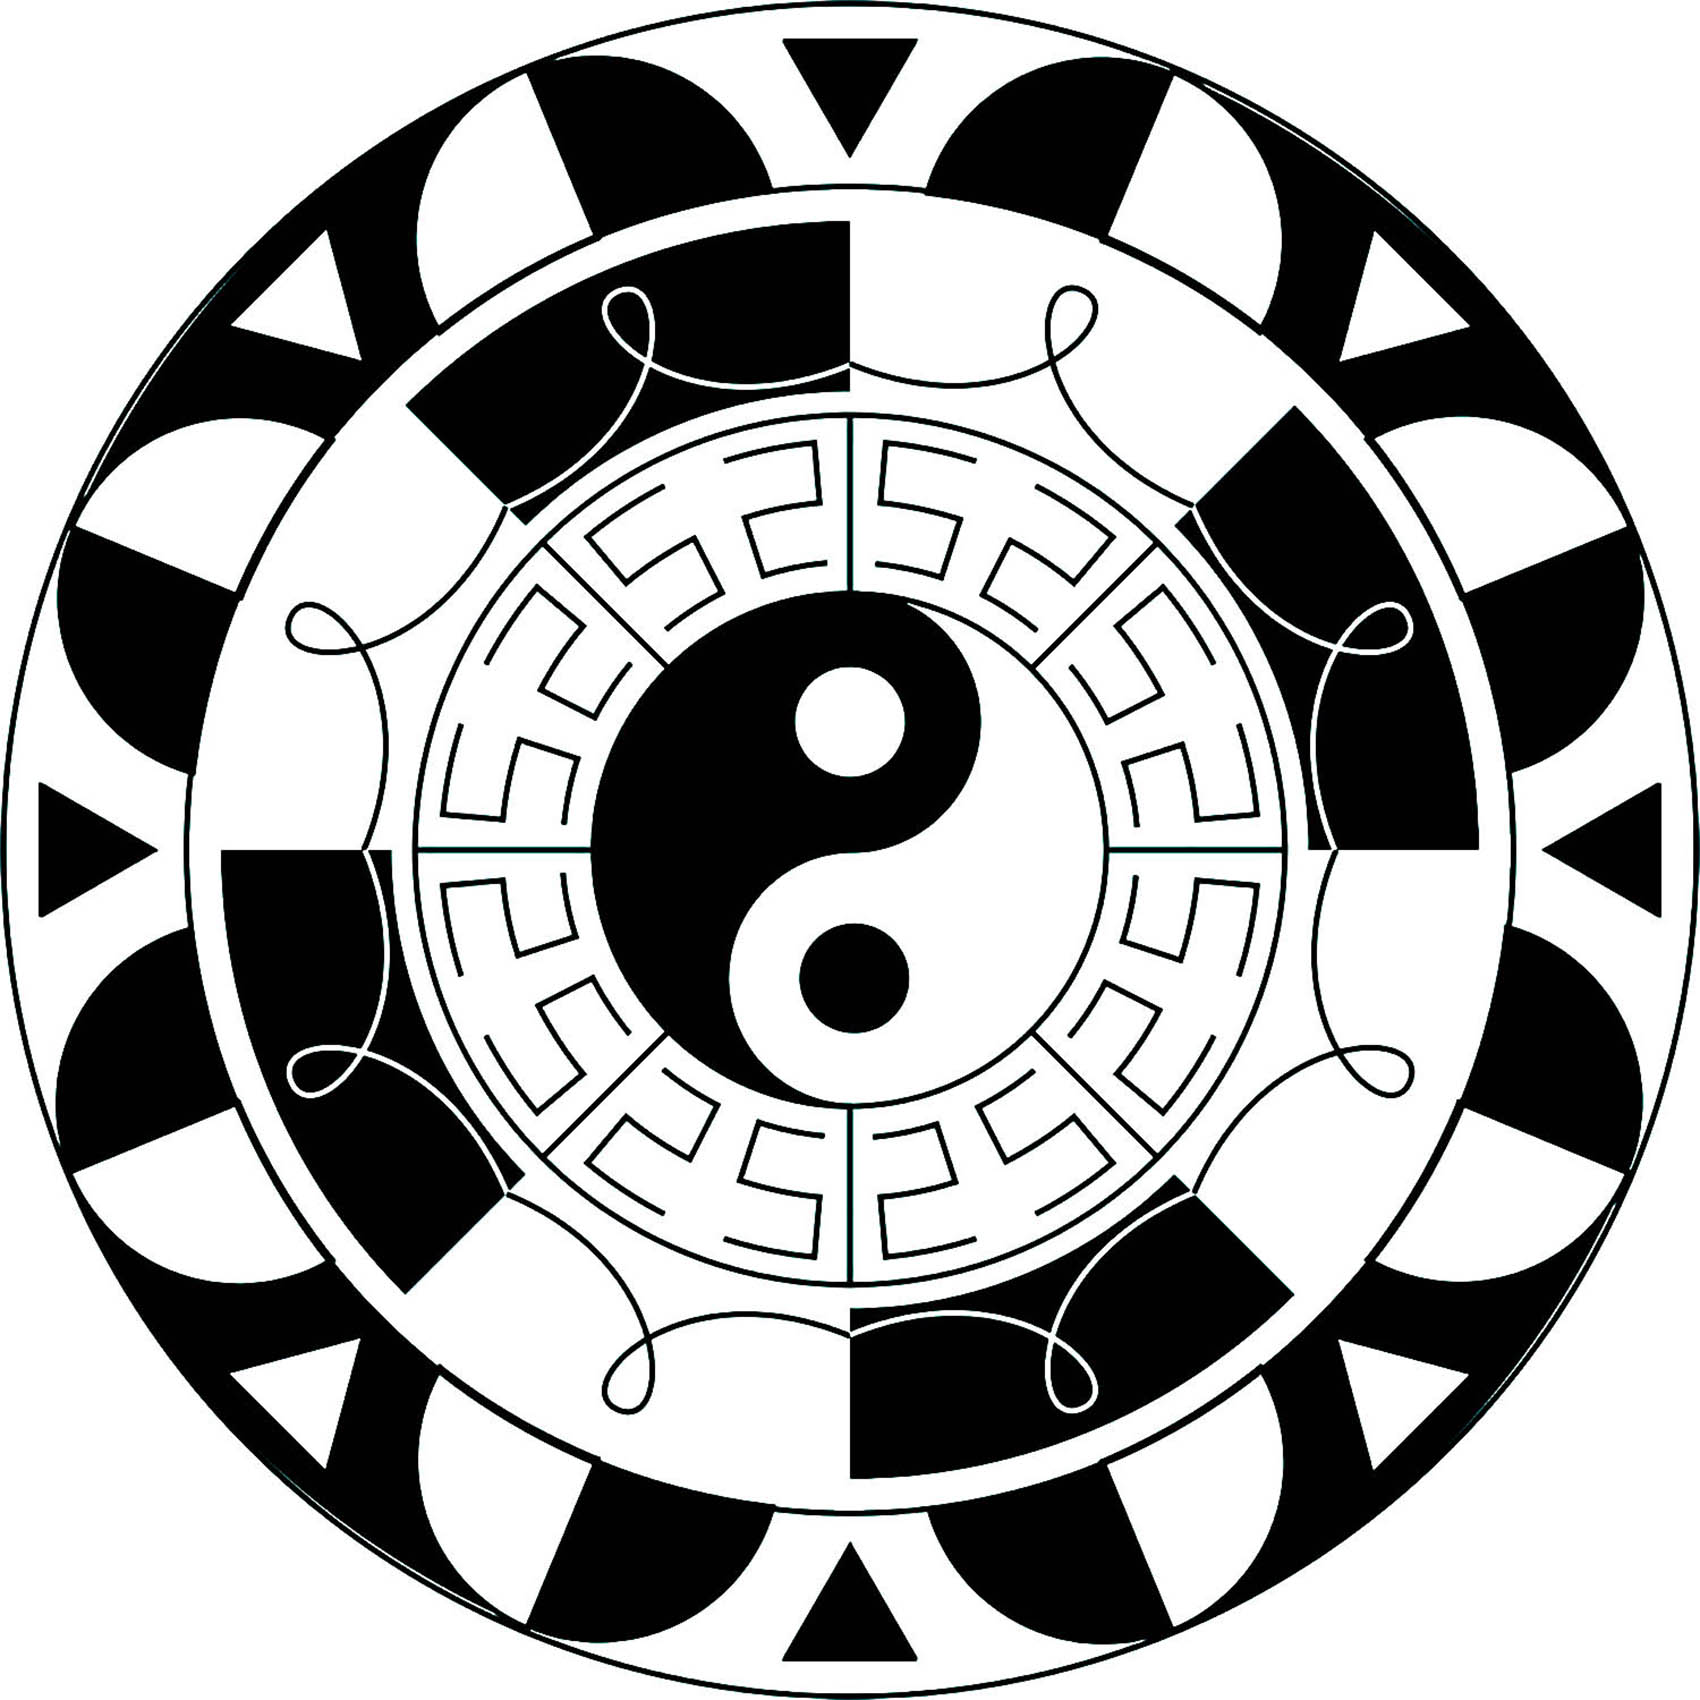 The famous Yin & Yang symbol integrated to a nice black & white Mandala